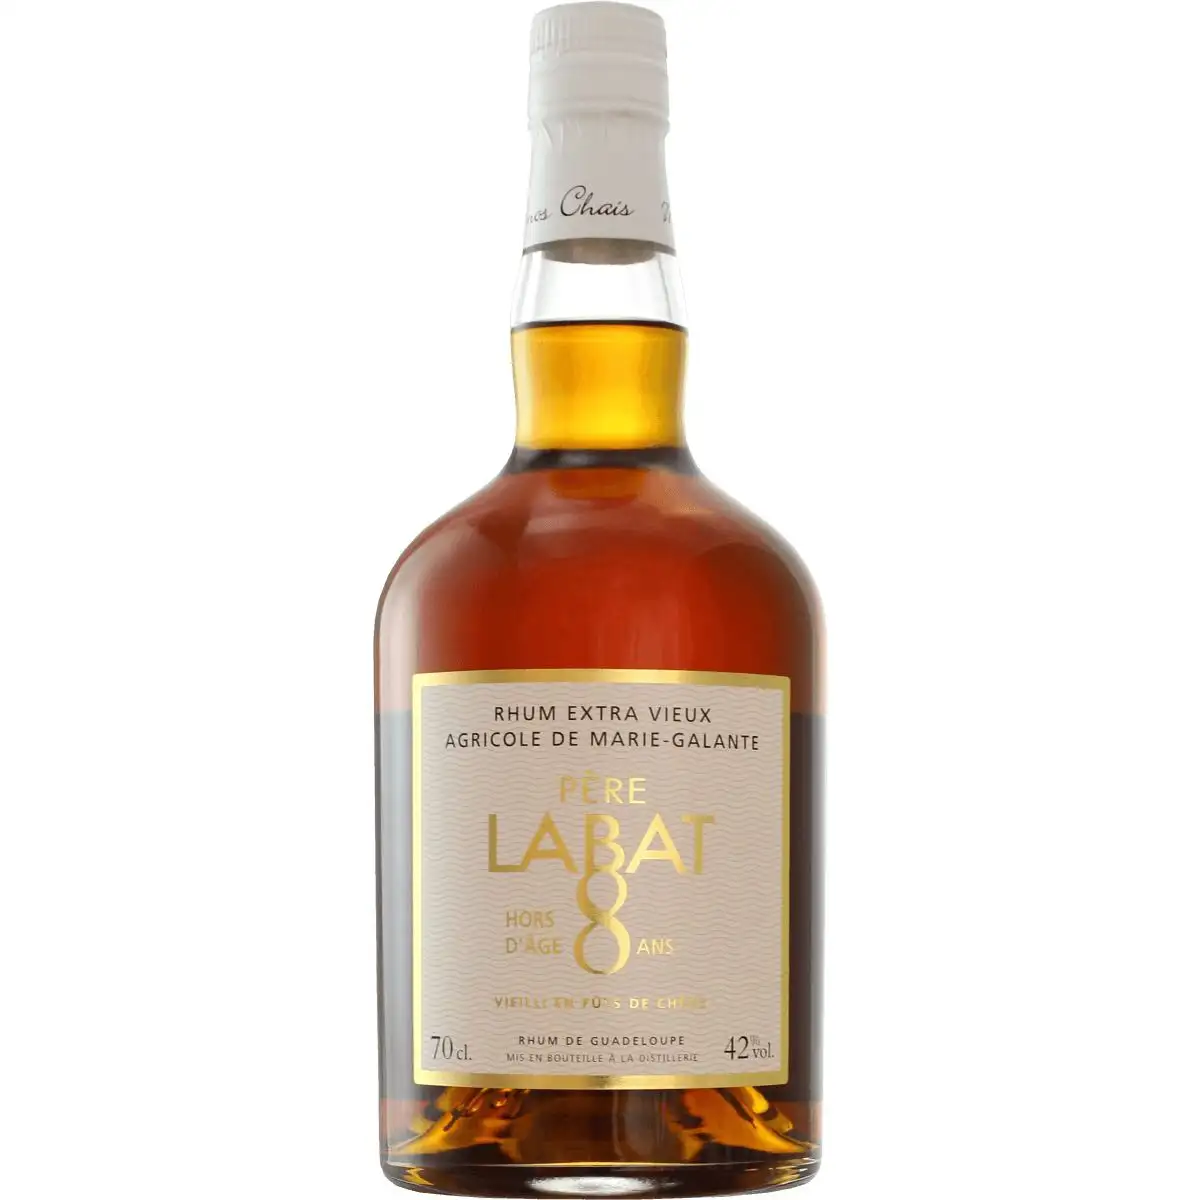 Image of the front of the bottle of the rum Père Labat 8 Ans Très Vieux